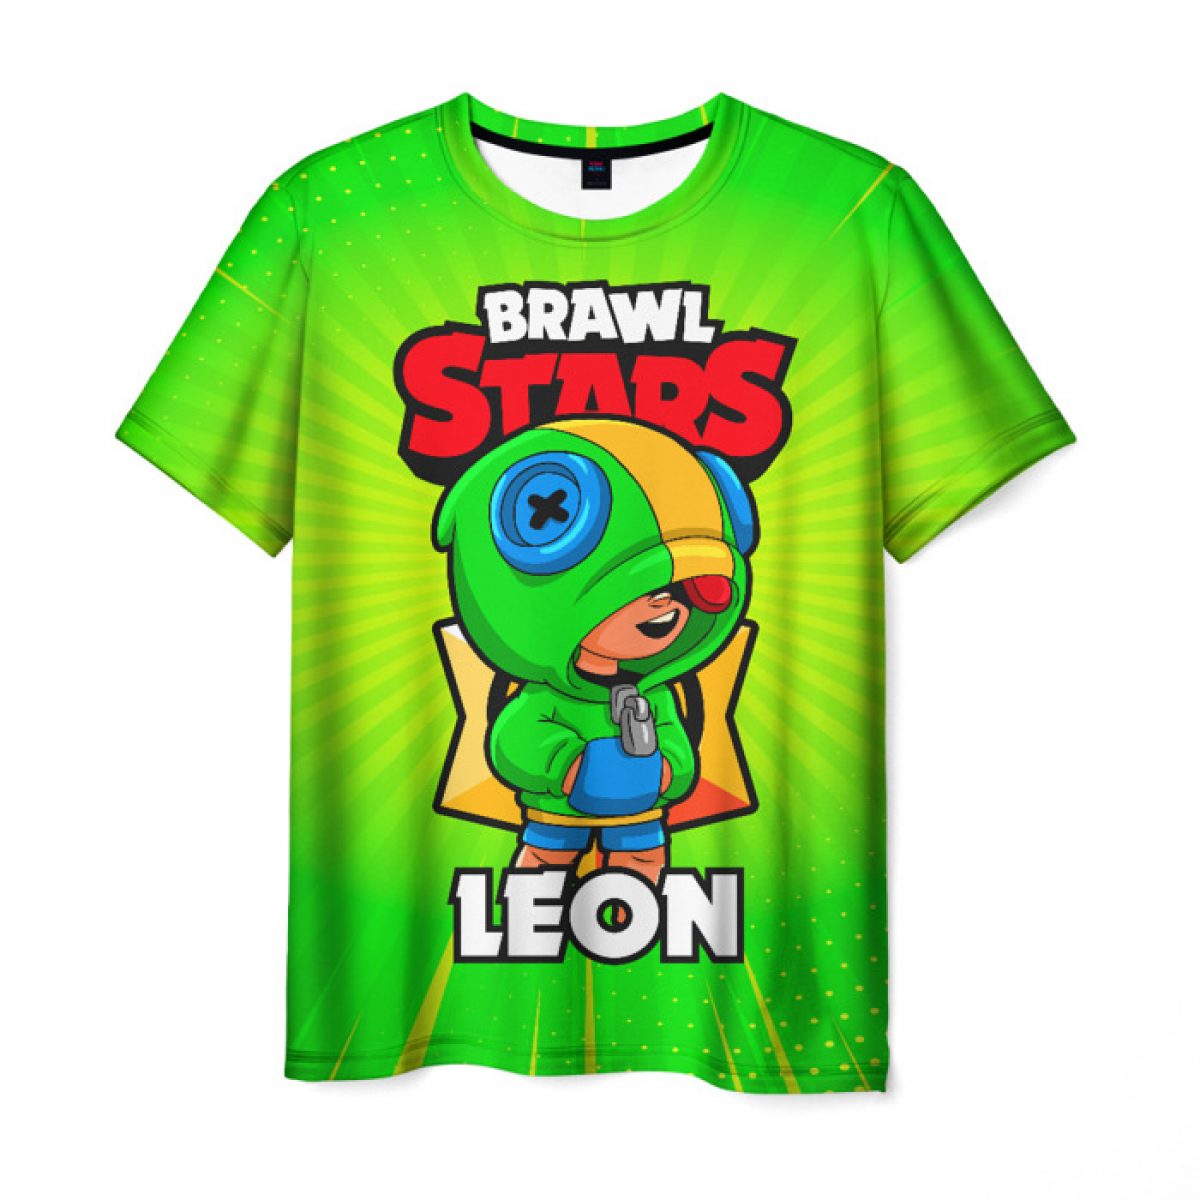 Buy Men S T Shirt Green Design Print Brawl Stars Leon Idolstore - shirt leon brawl stars